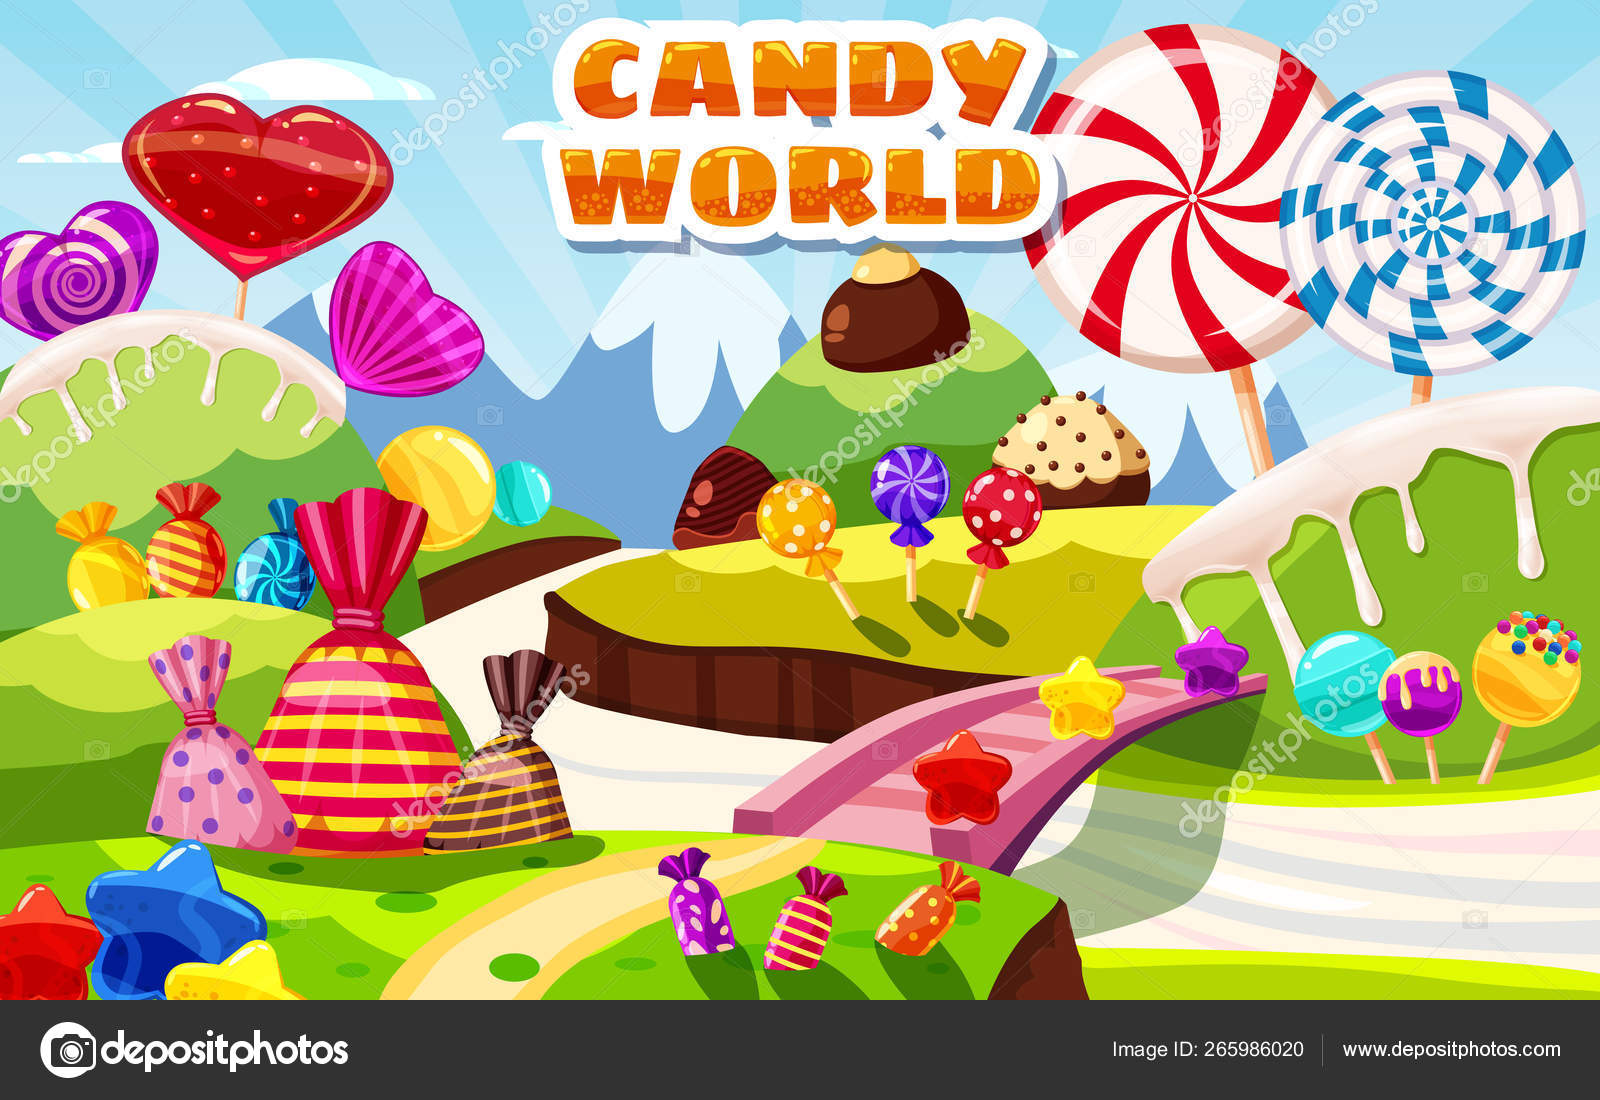 Ícones de jogos de doces grande conjunto de desenhos animados